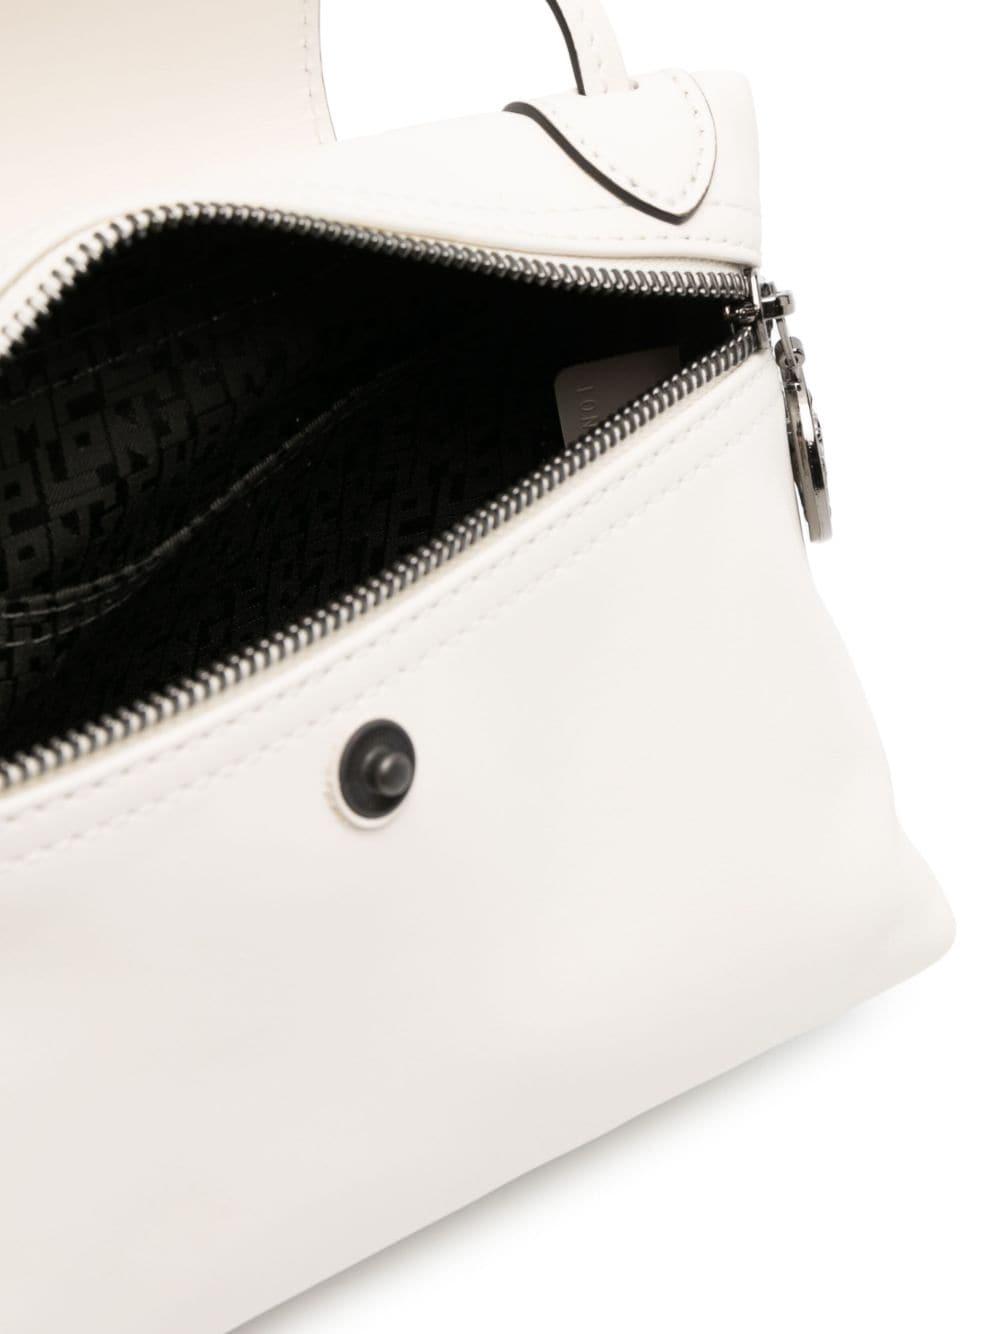 Longchamp Le Pliage Xtra XS Handbag Ecru - Leather $445.00